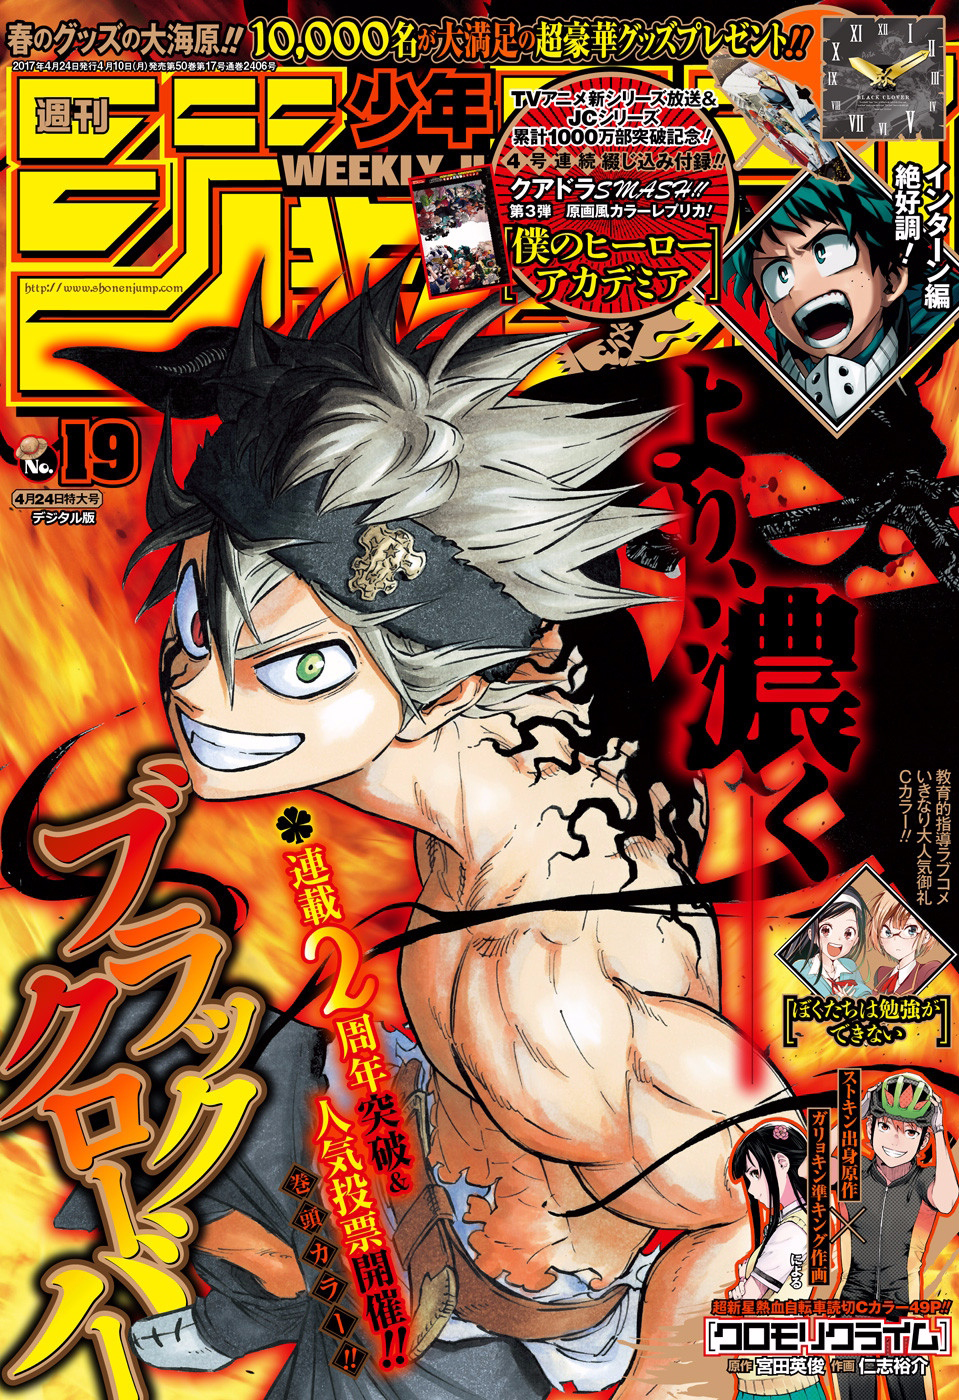 Weekly Shonen Jump Issue 19 17 Jump Database Fandom